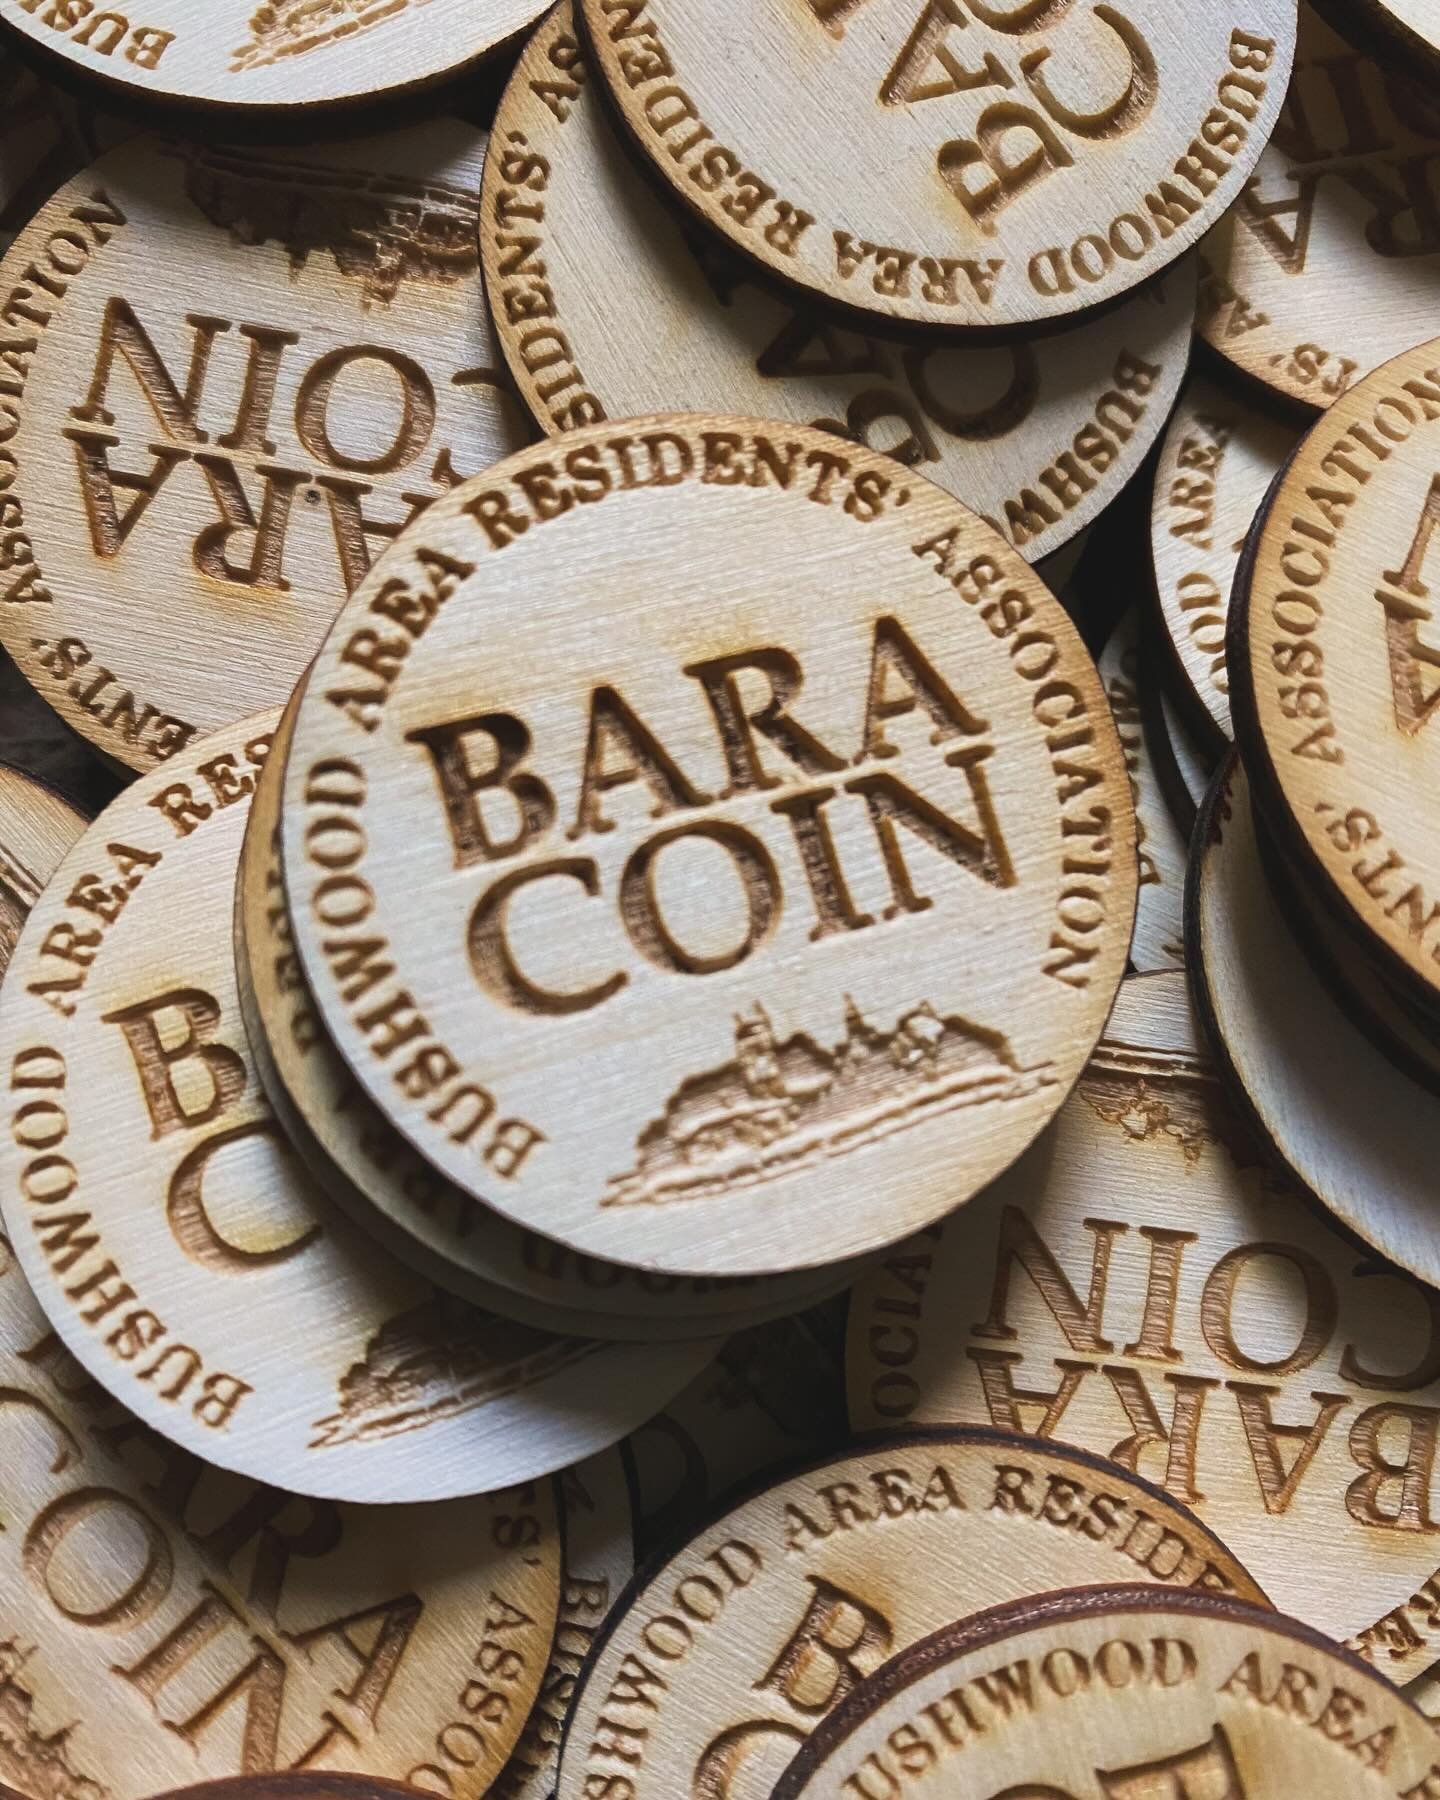 The freshly minted wooden BARA coins. Ready for tonight&rsquo;s cocktail night @stoneminimarket and future BARA events.
#leytonstone #e11 #residentsassociation #bushwood #lasercut #customcoins